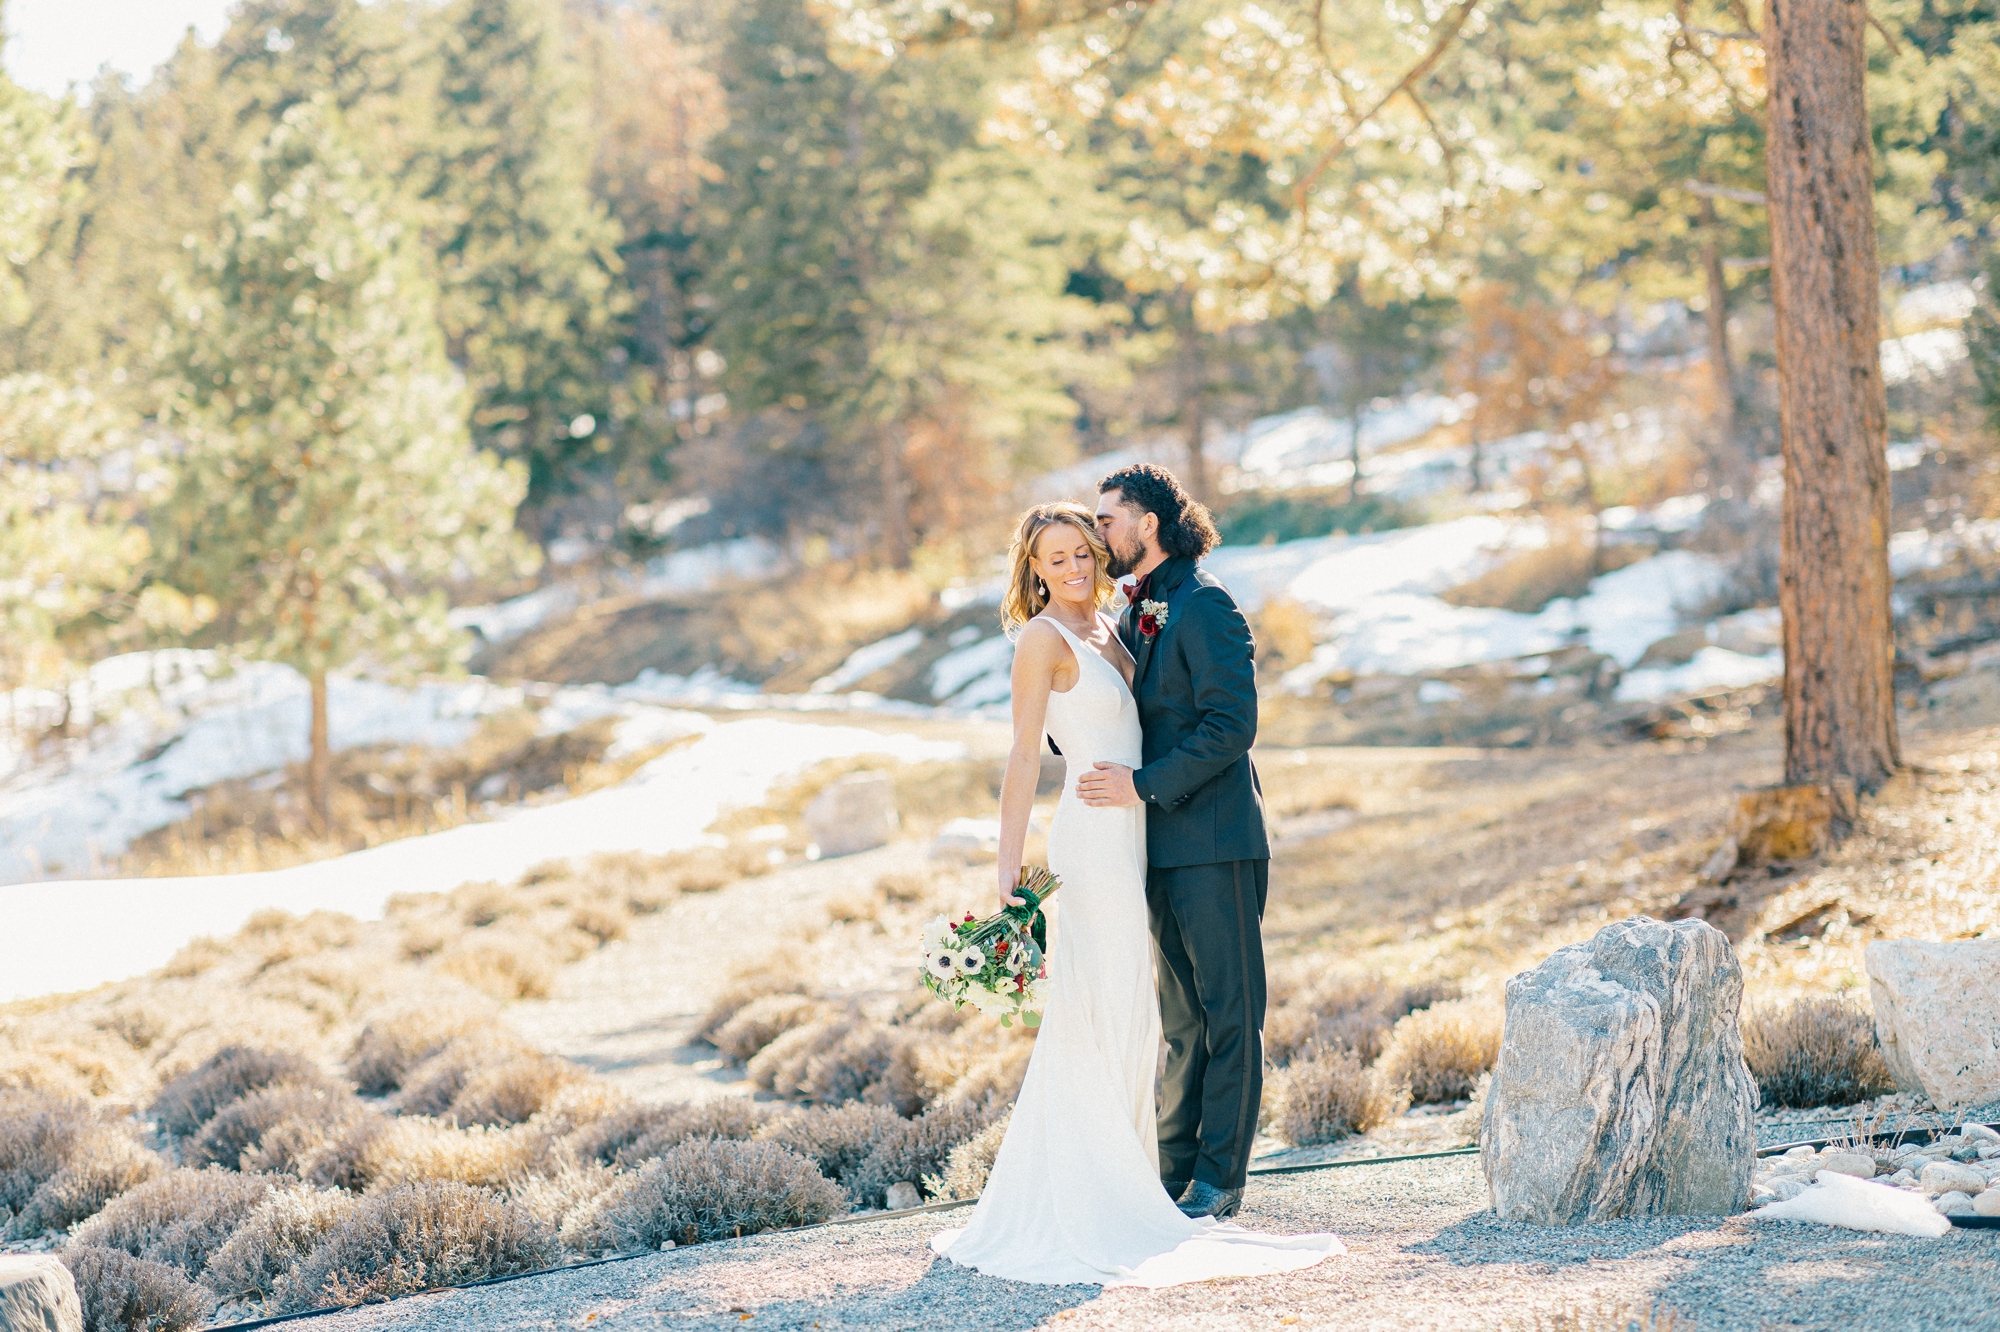 Winter wedding at the Woodlands Colorado wedding venue captured by Taylor Nicole Photography.